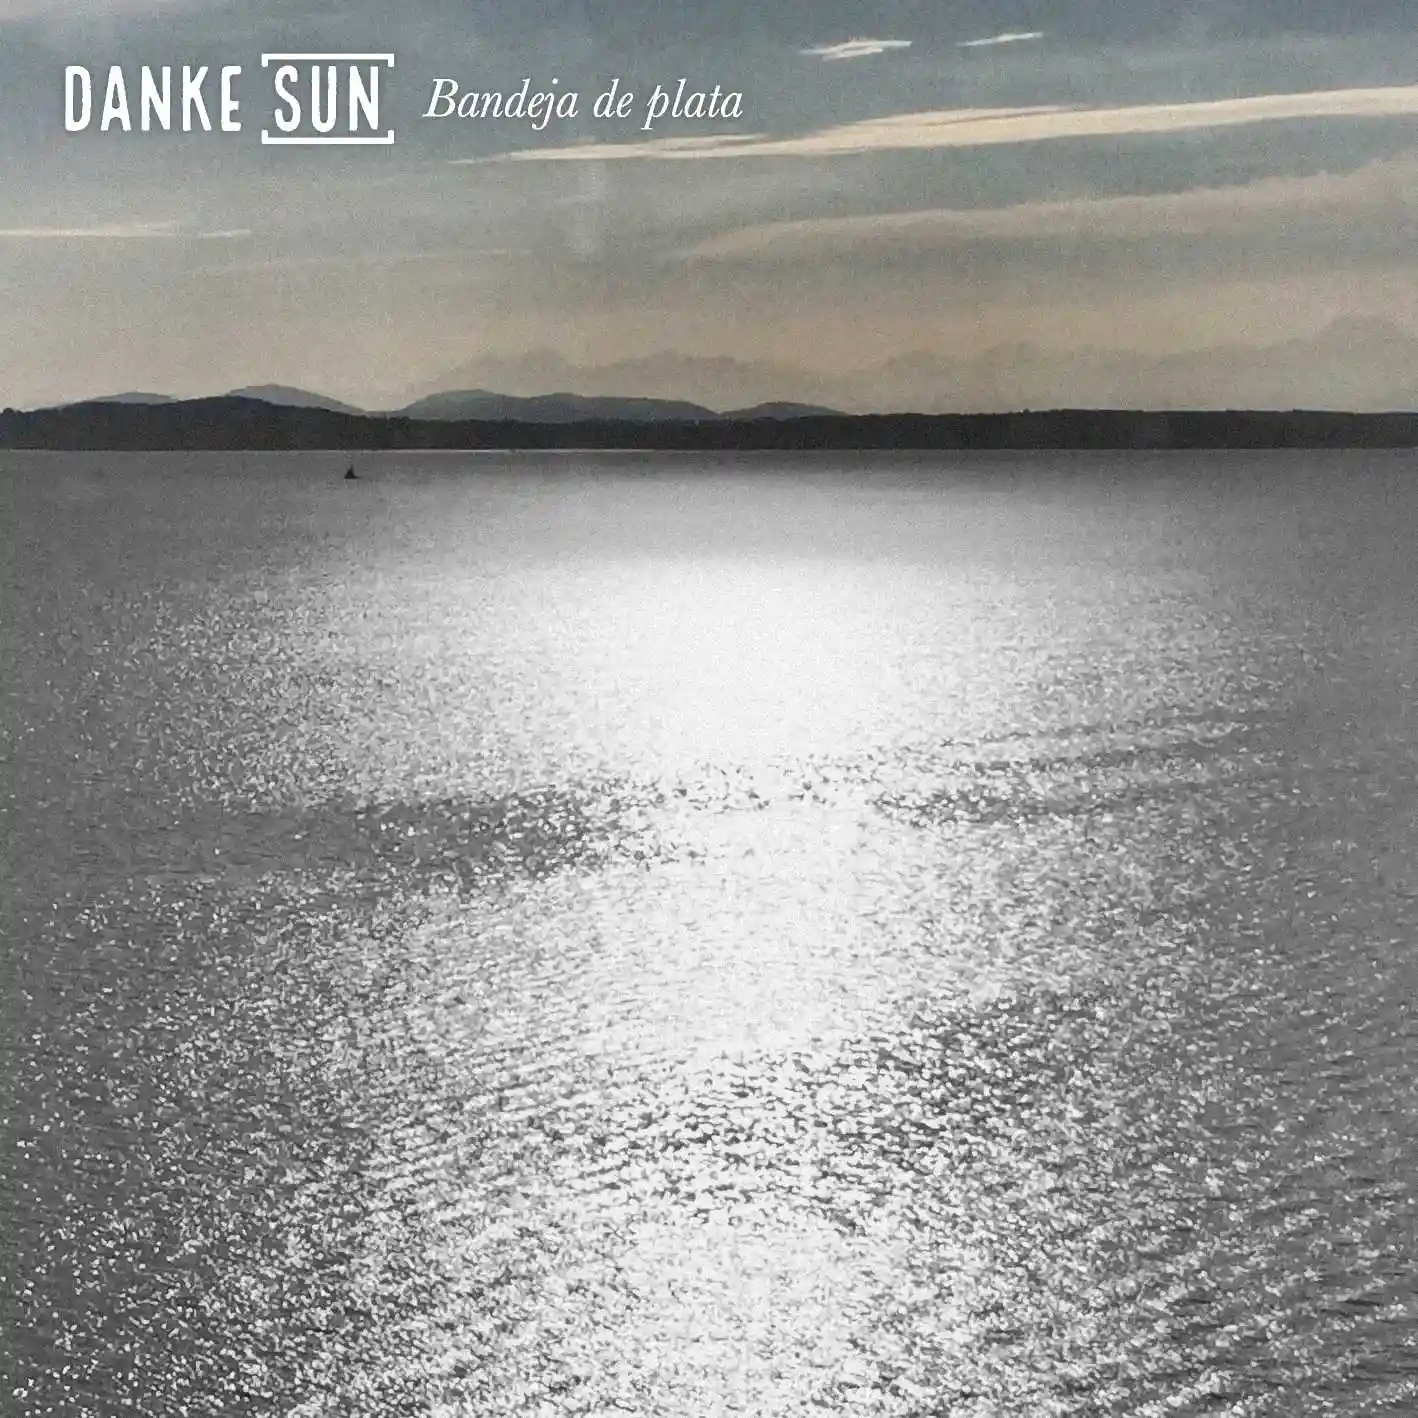 Album cover for “Bandeja de plata” by Danke Sun